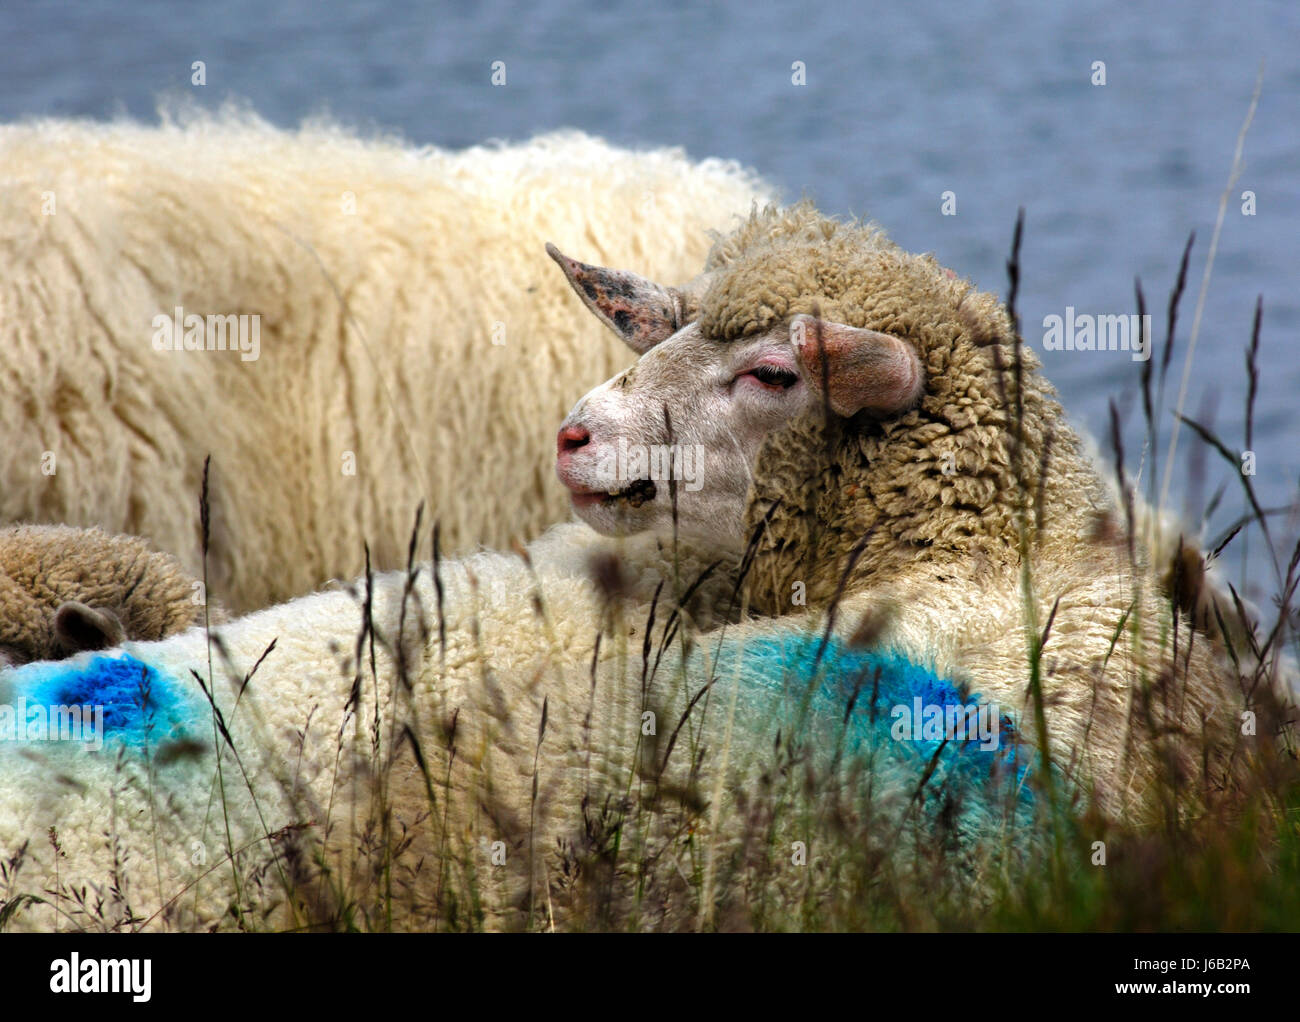 animals sheep inoperative rehash ruminate agricultural animal mammal animals Stock Photo